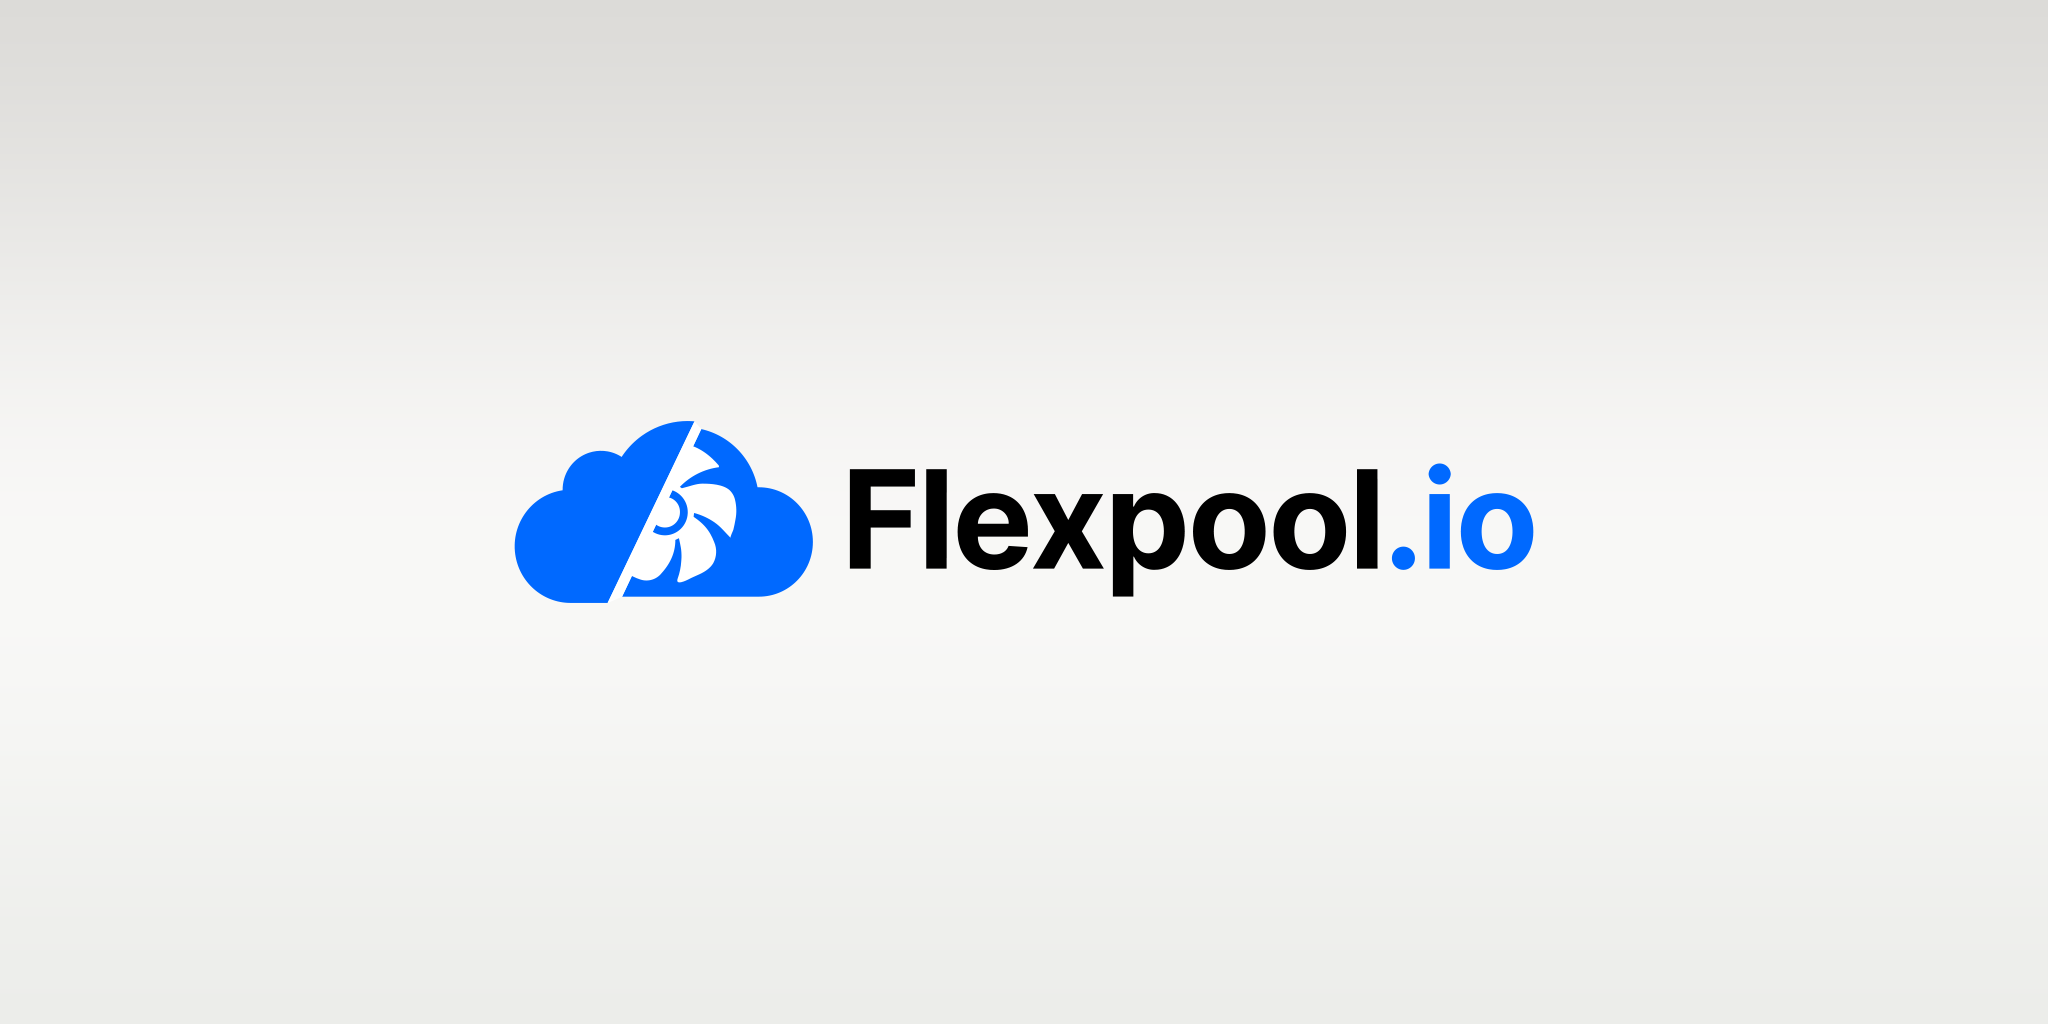 Flexpool